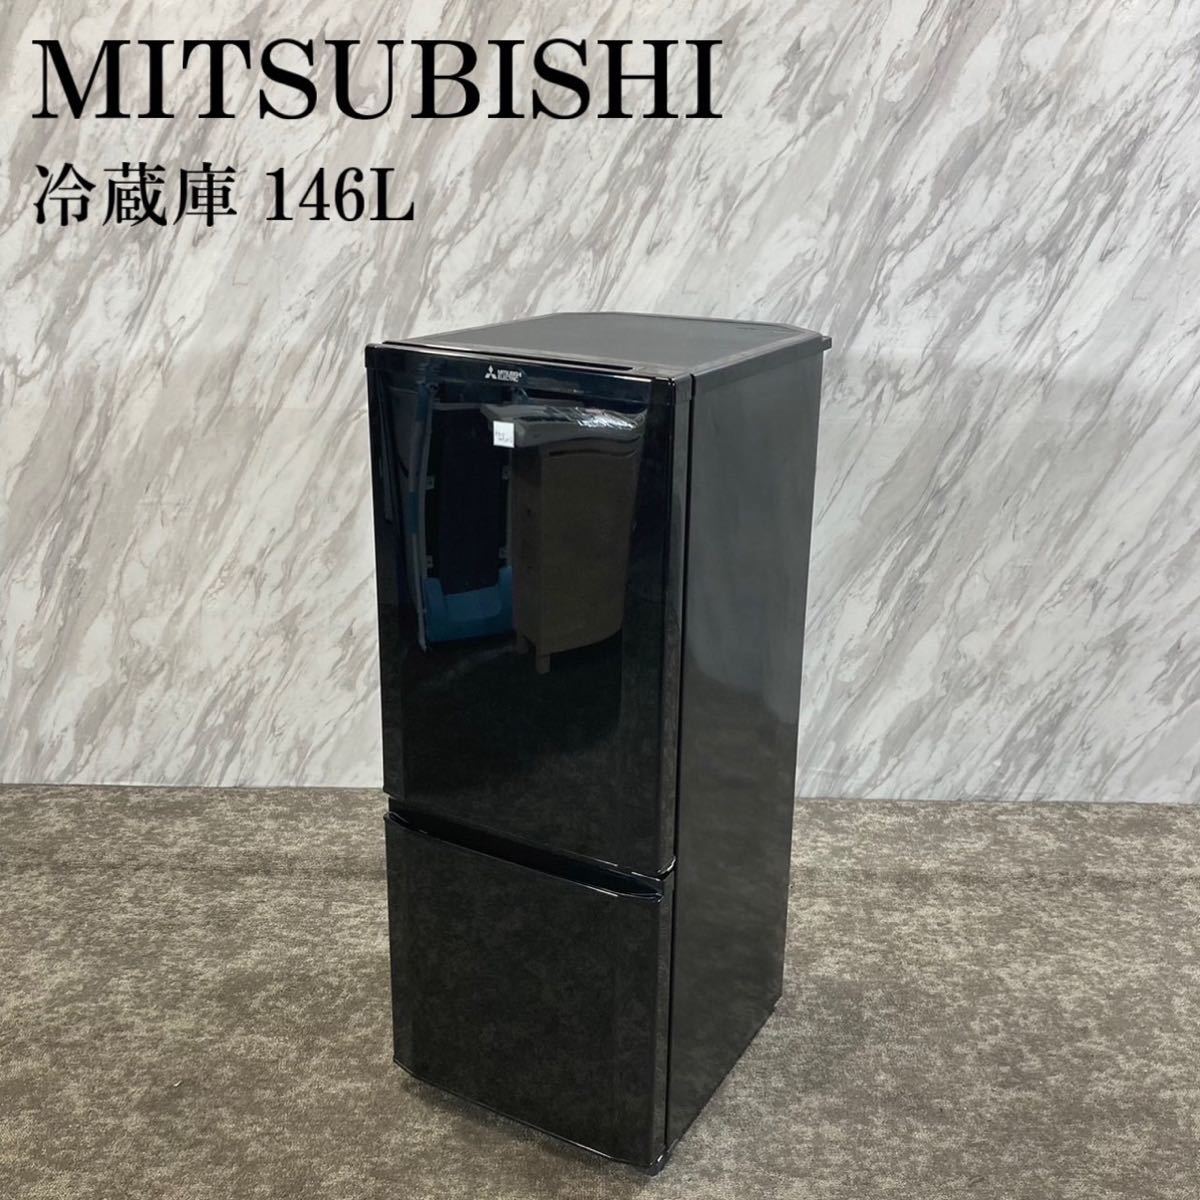 即発送可能】 MR-P15EE-KK1 冷蔵庫 MITSUBISHI 146L J603 家電 100